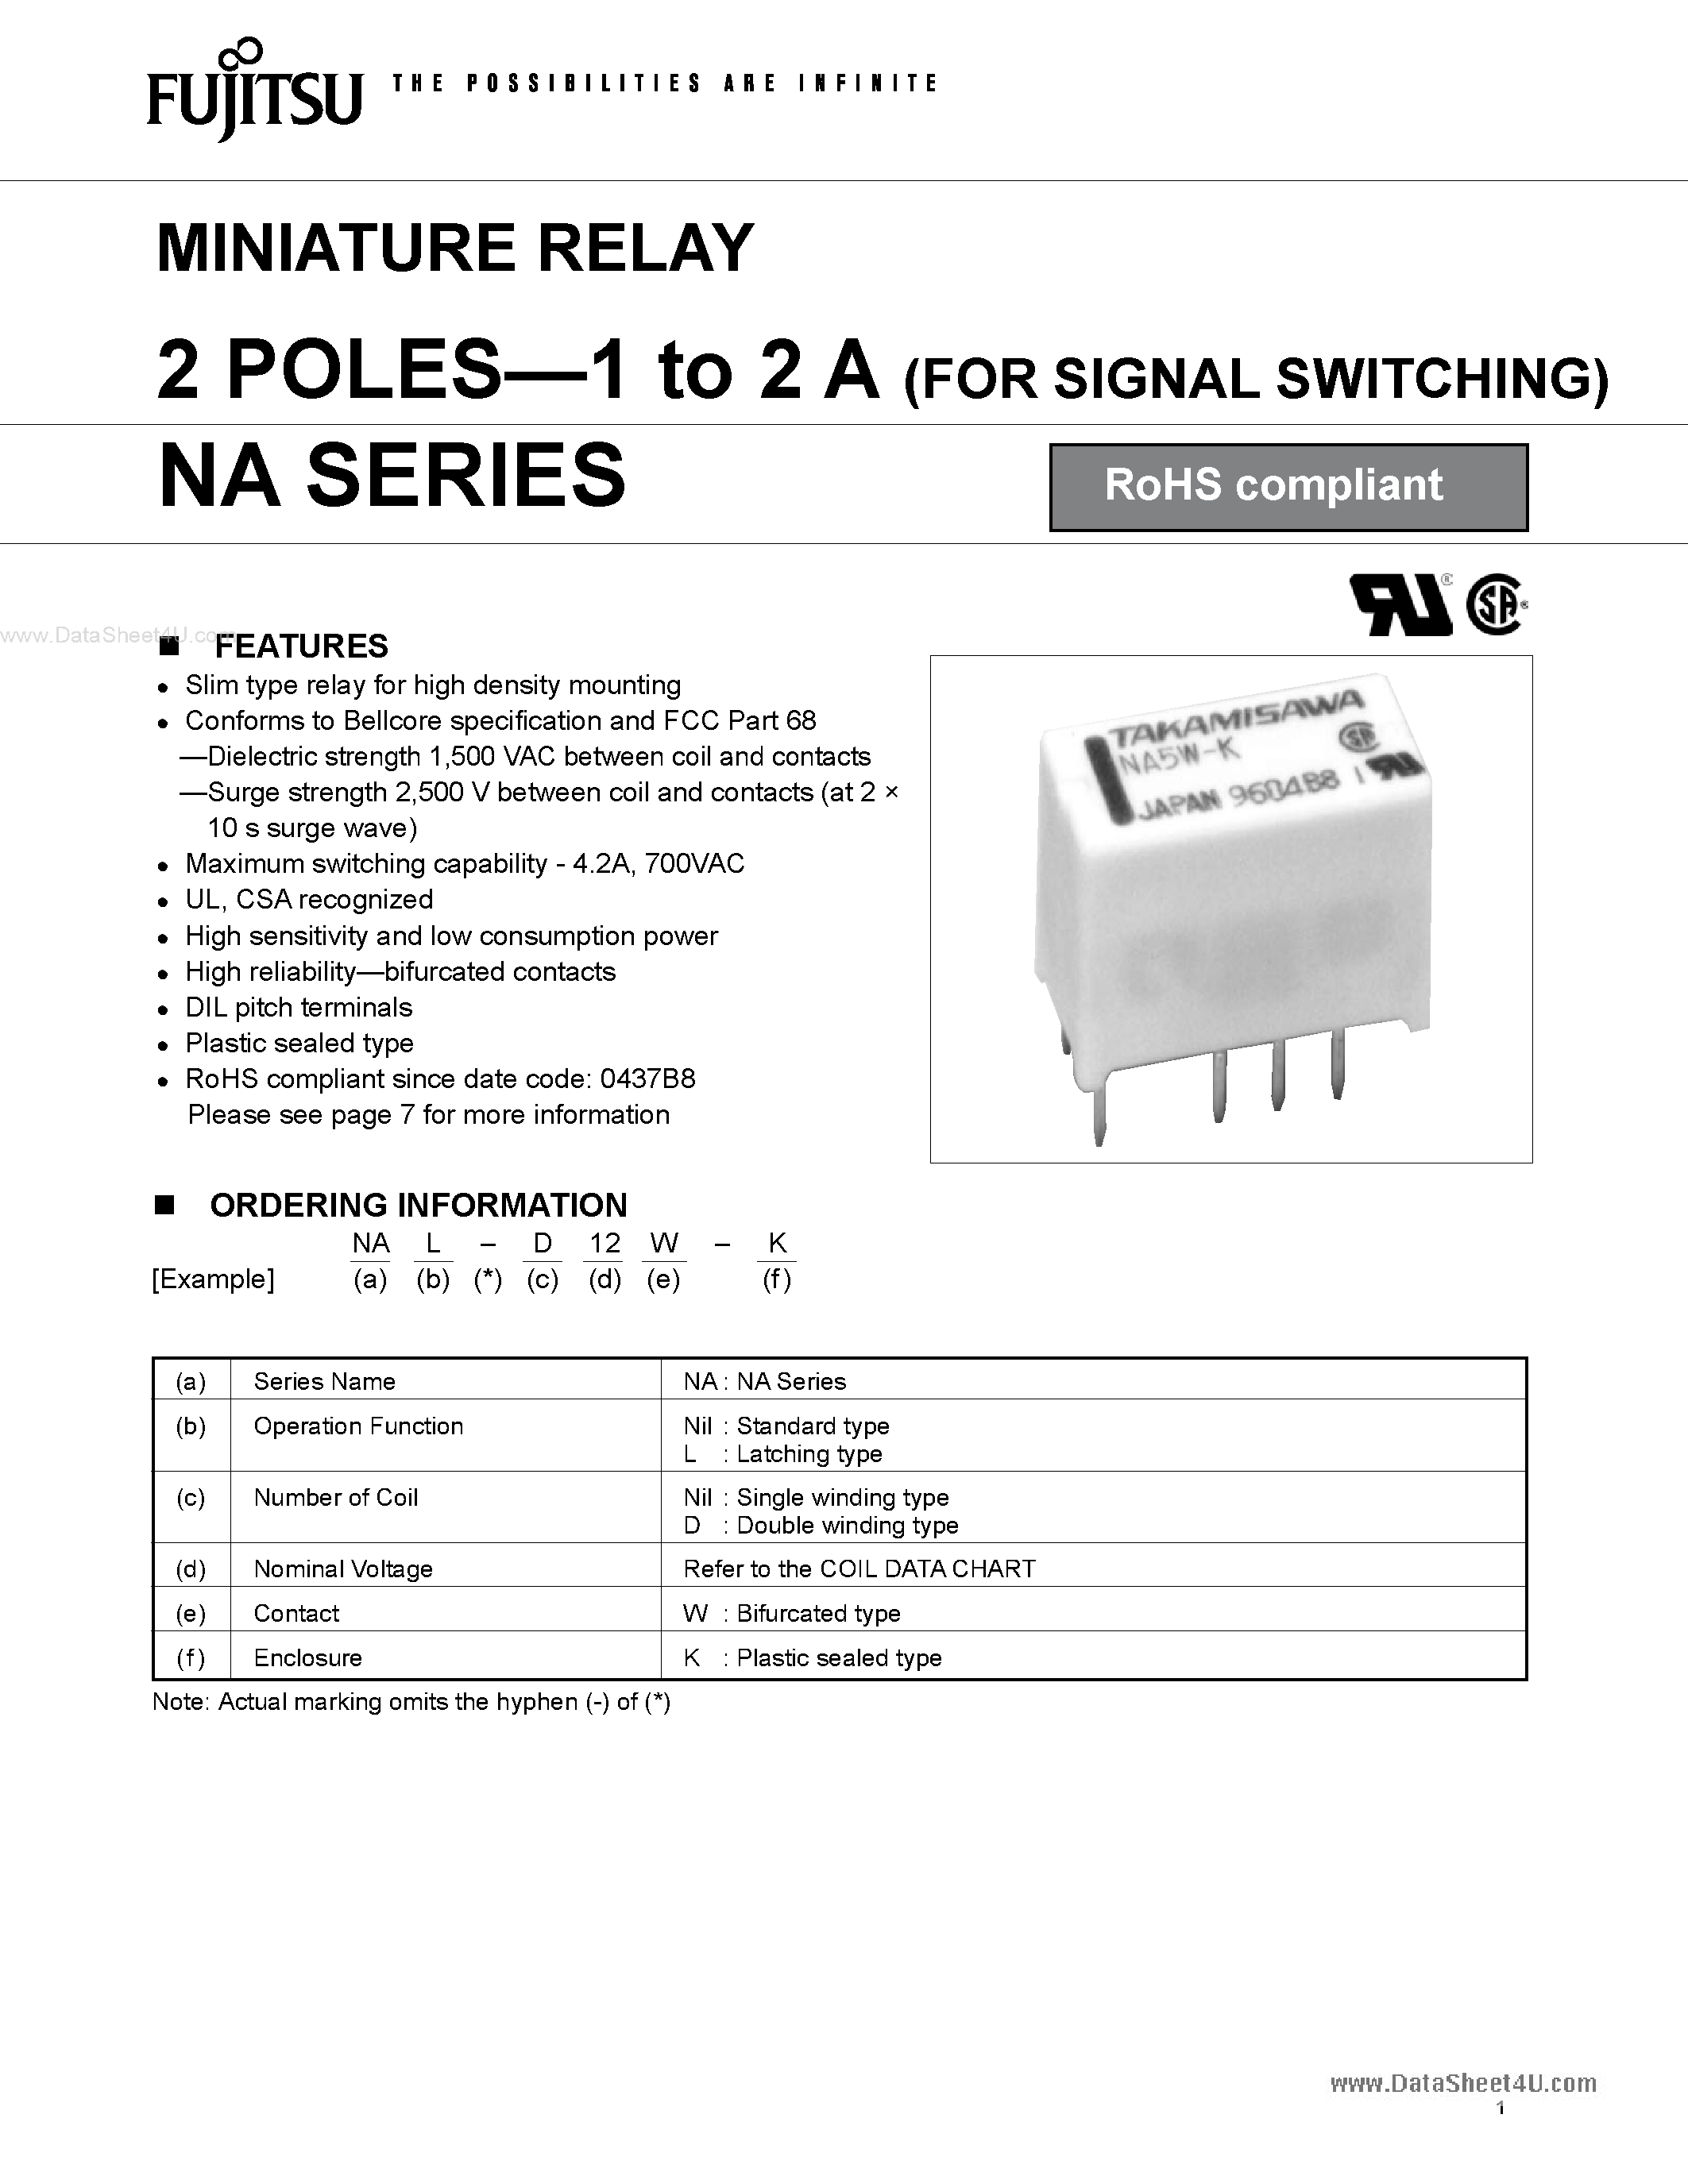 Datasheet NA12W-K - Miniature Relay page 1